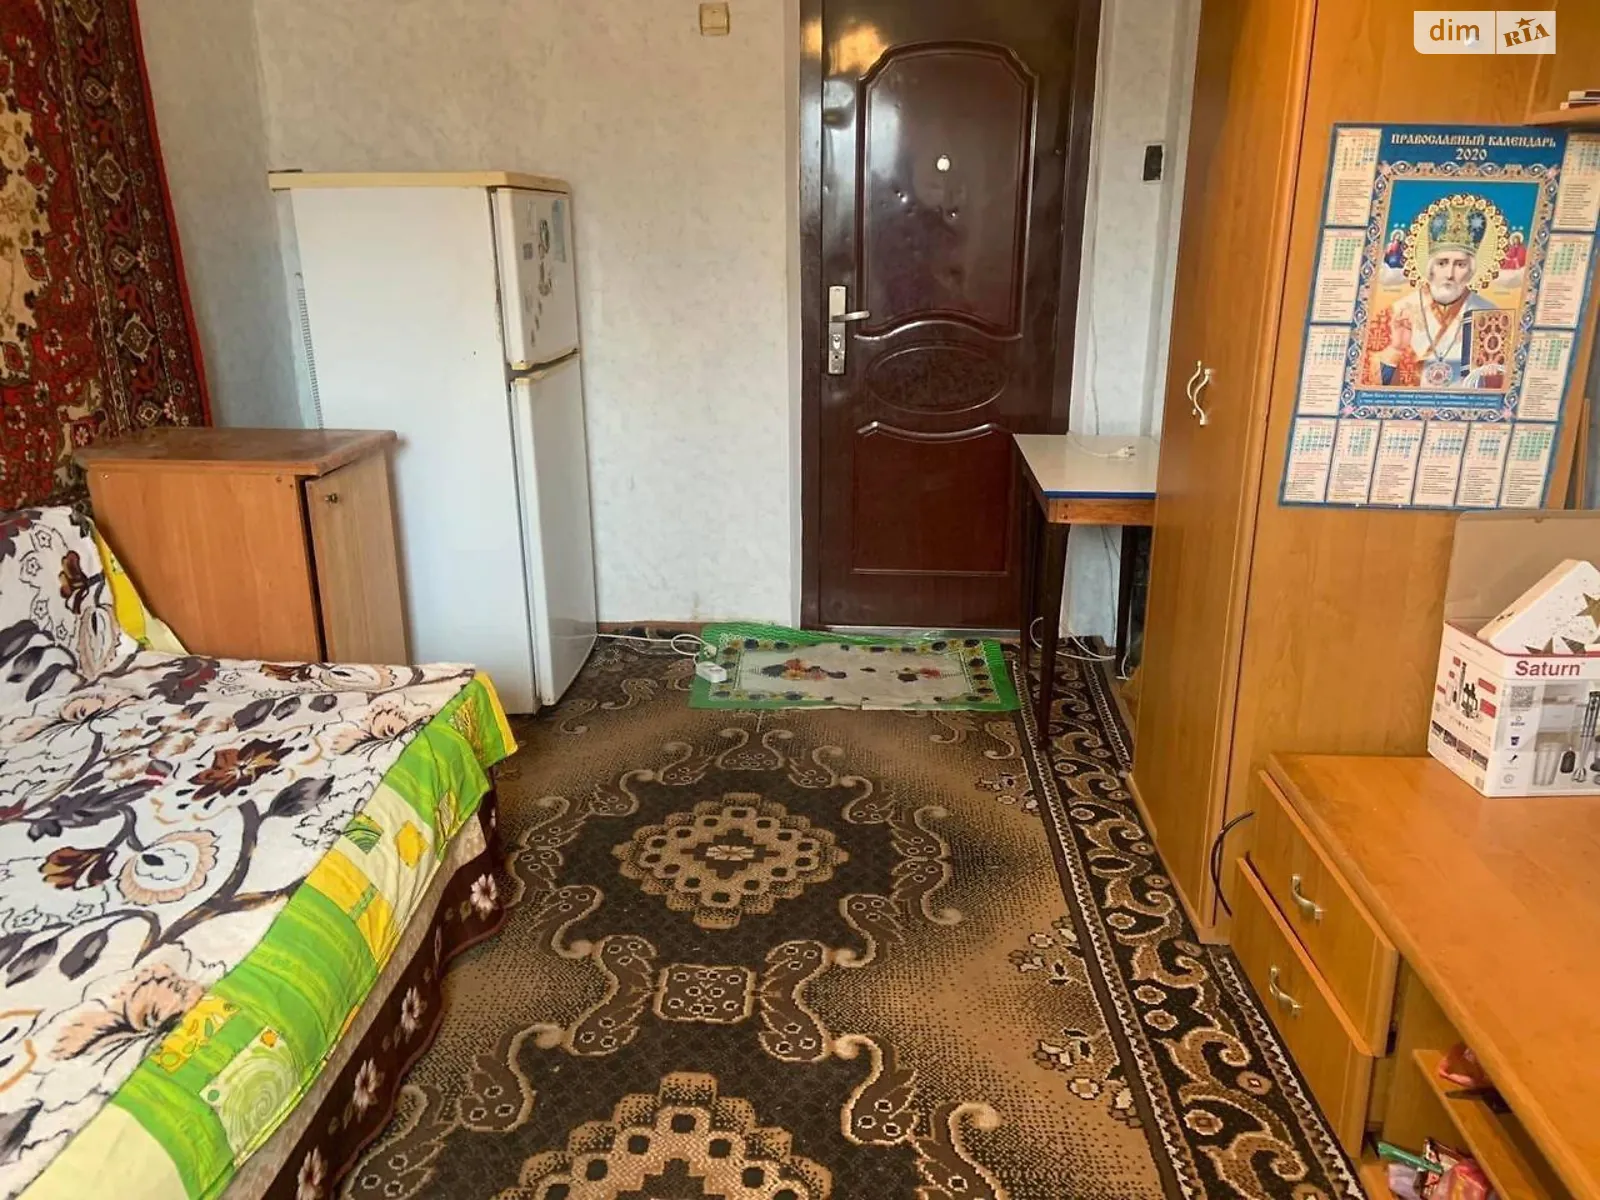 Продается комната 18 кв. м в Черноморске, цена: 5000 $ - фото 1